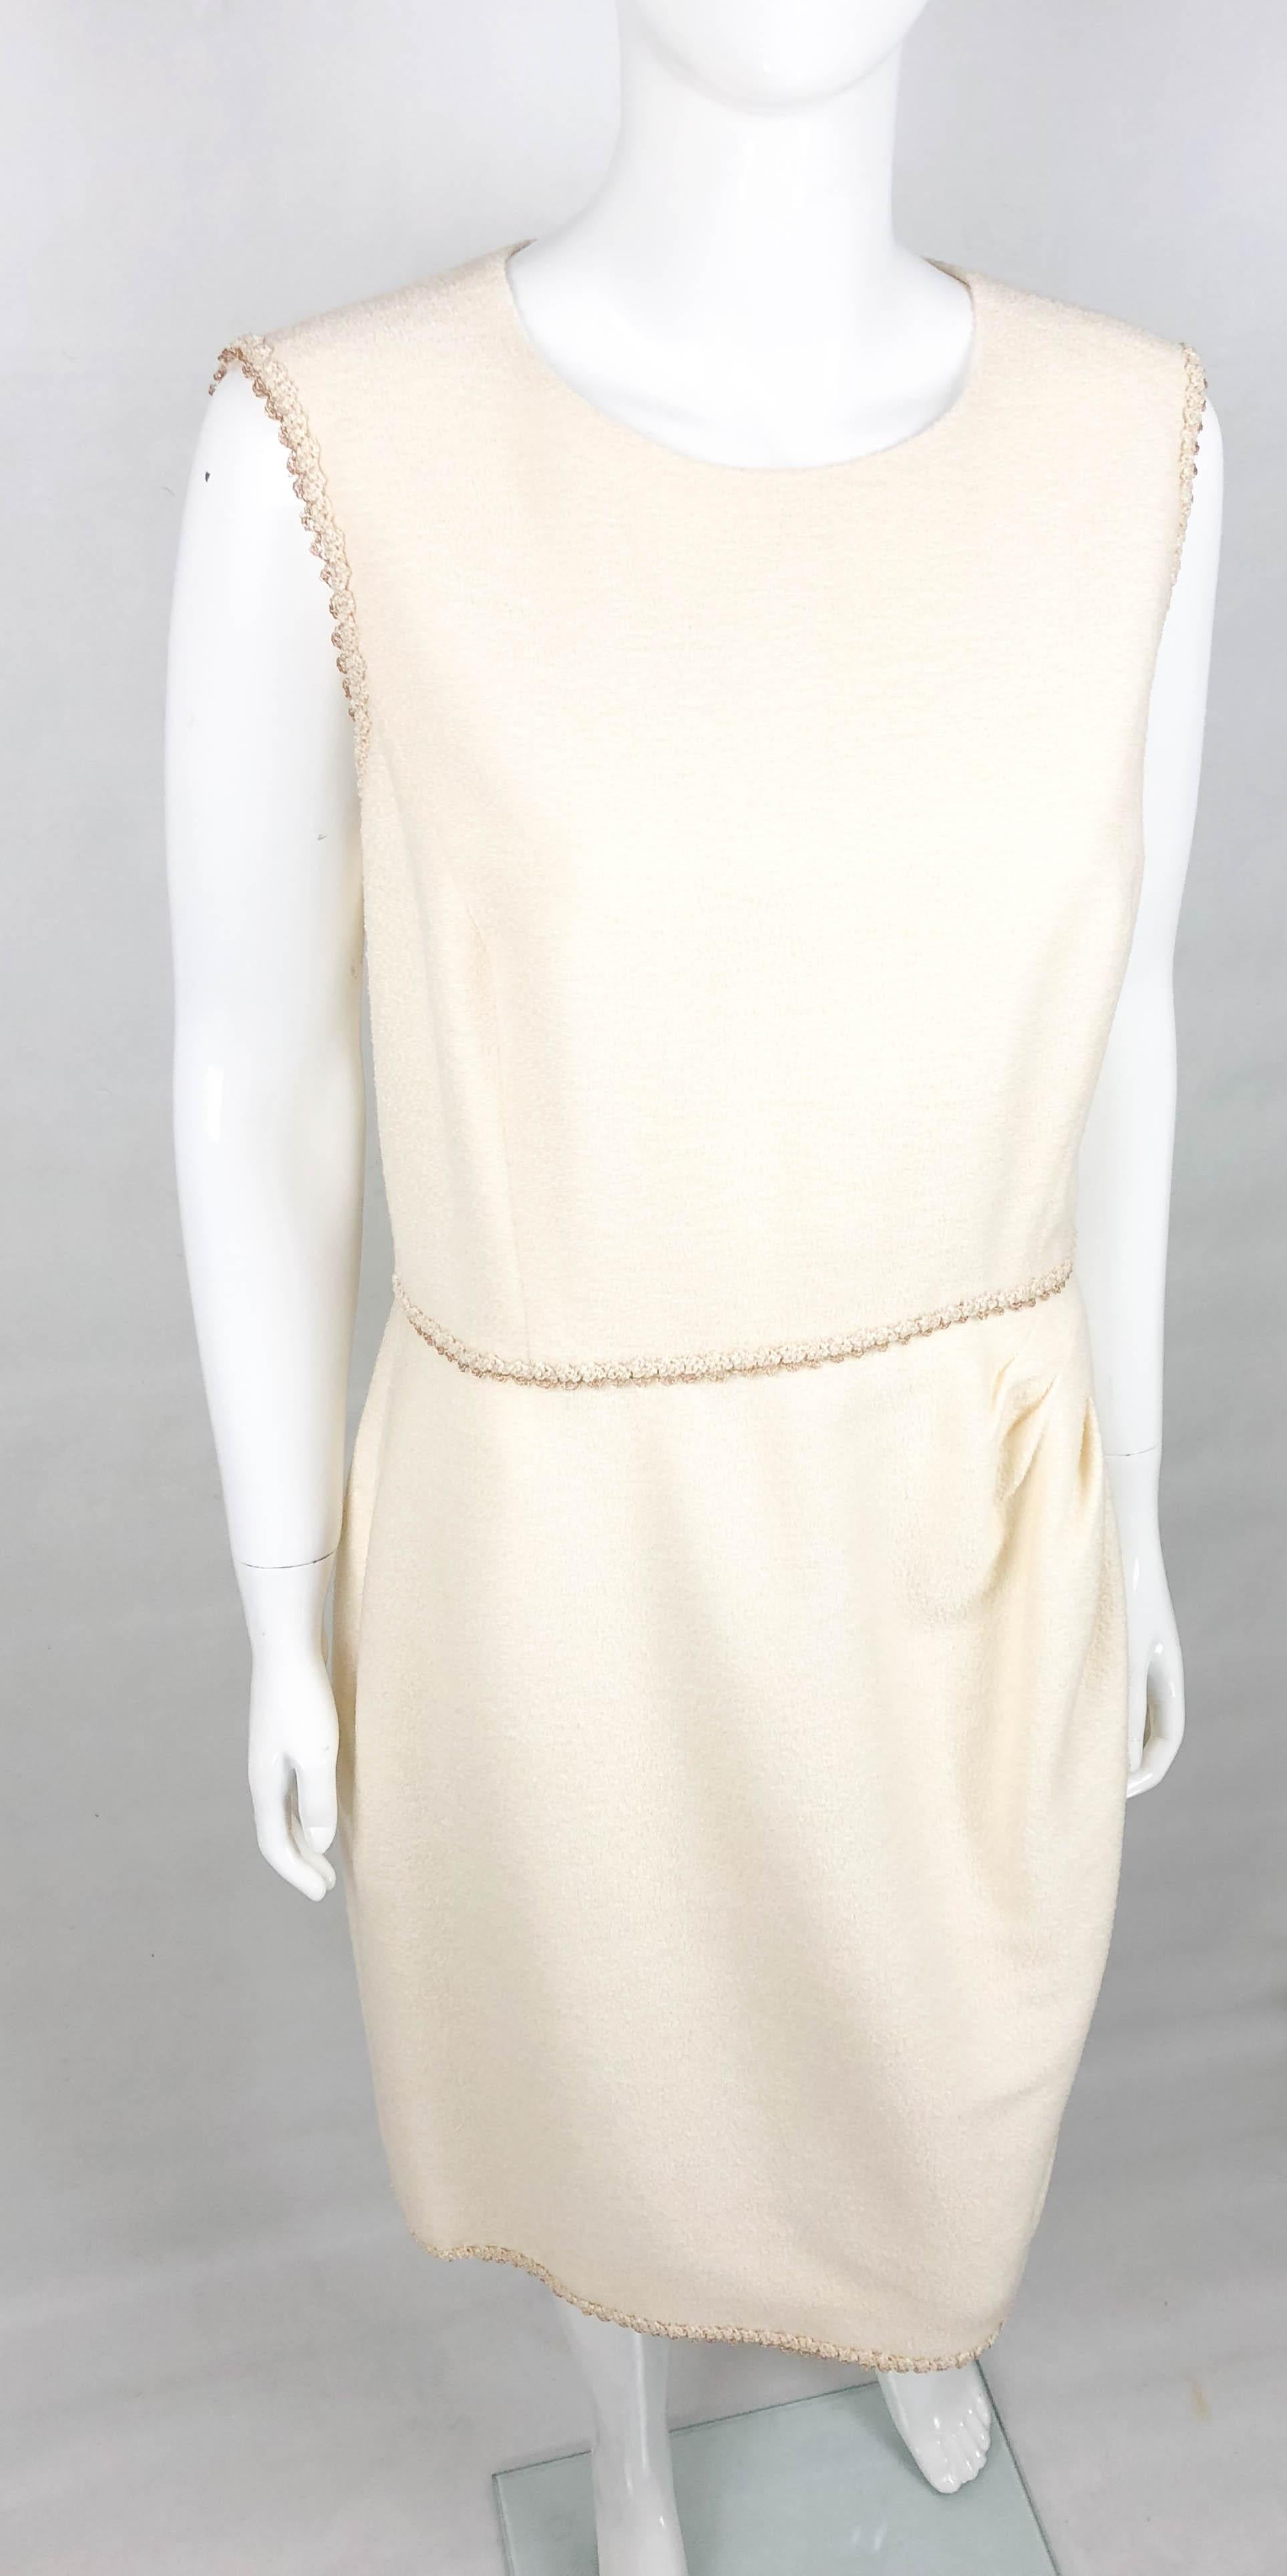 2010 Unworn Chanel Runway Look Cream Dress With Gold Thread Trim For Sale 1